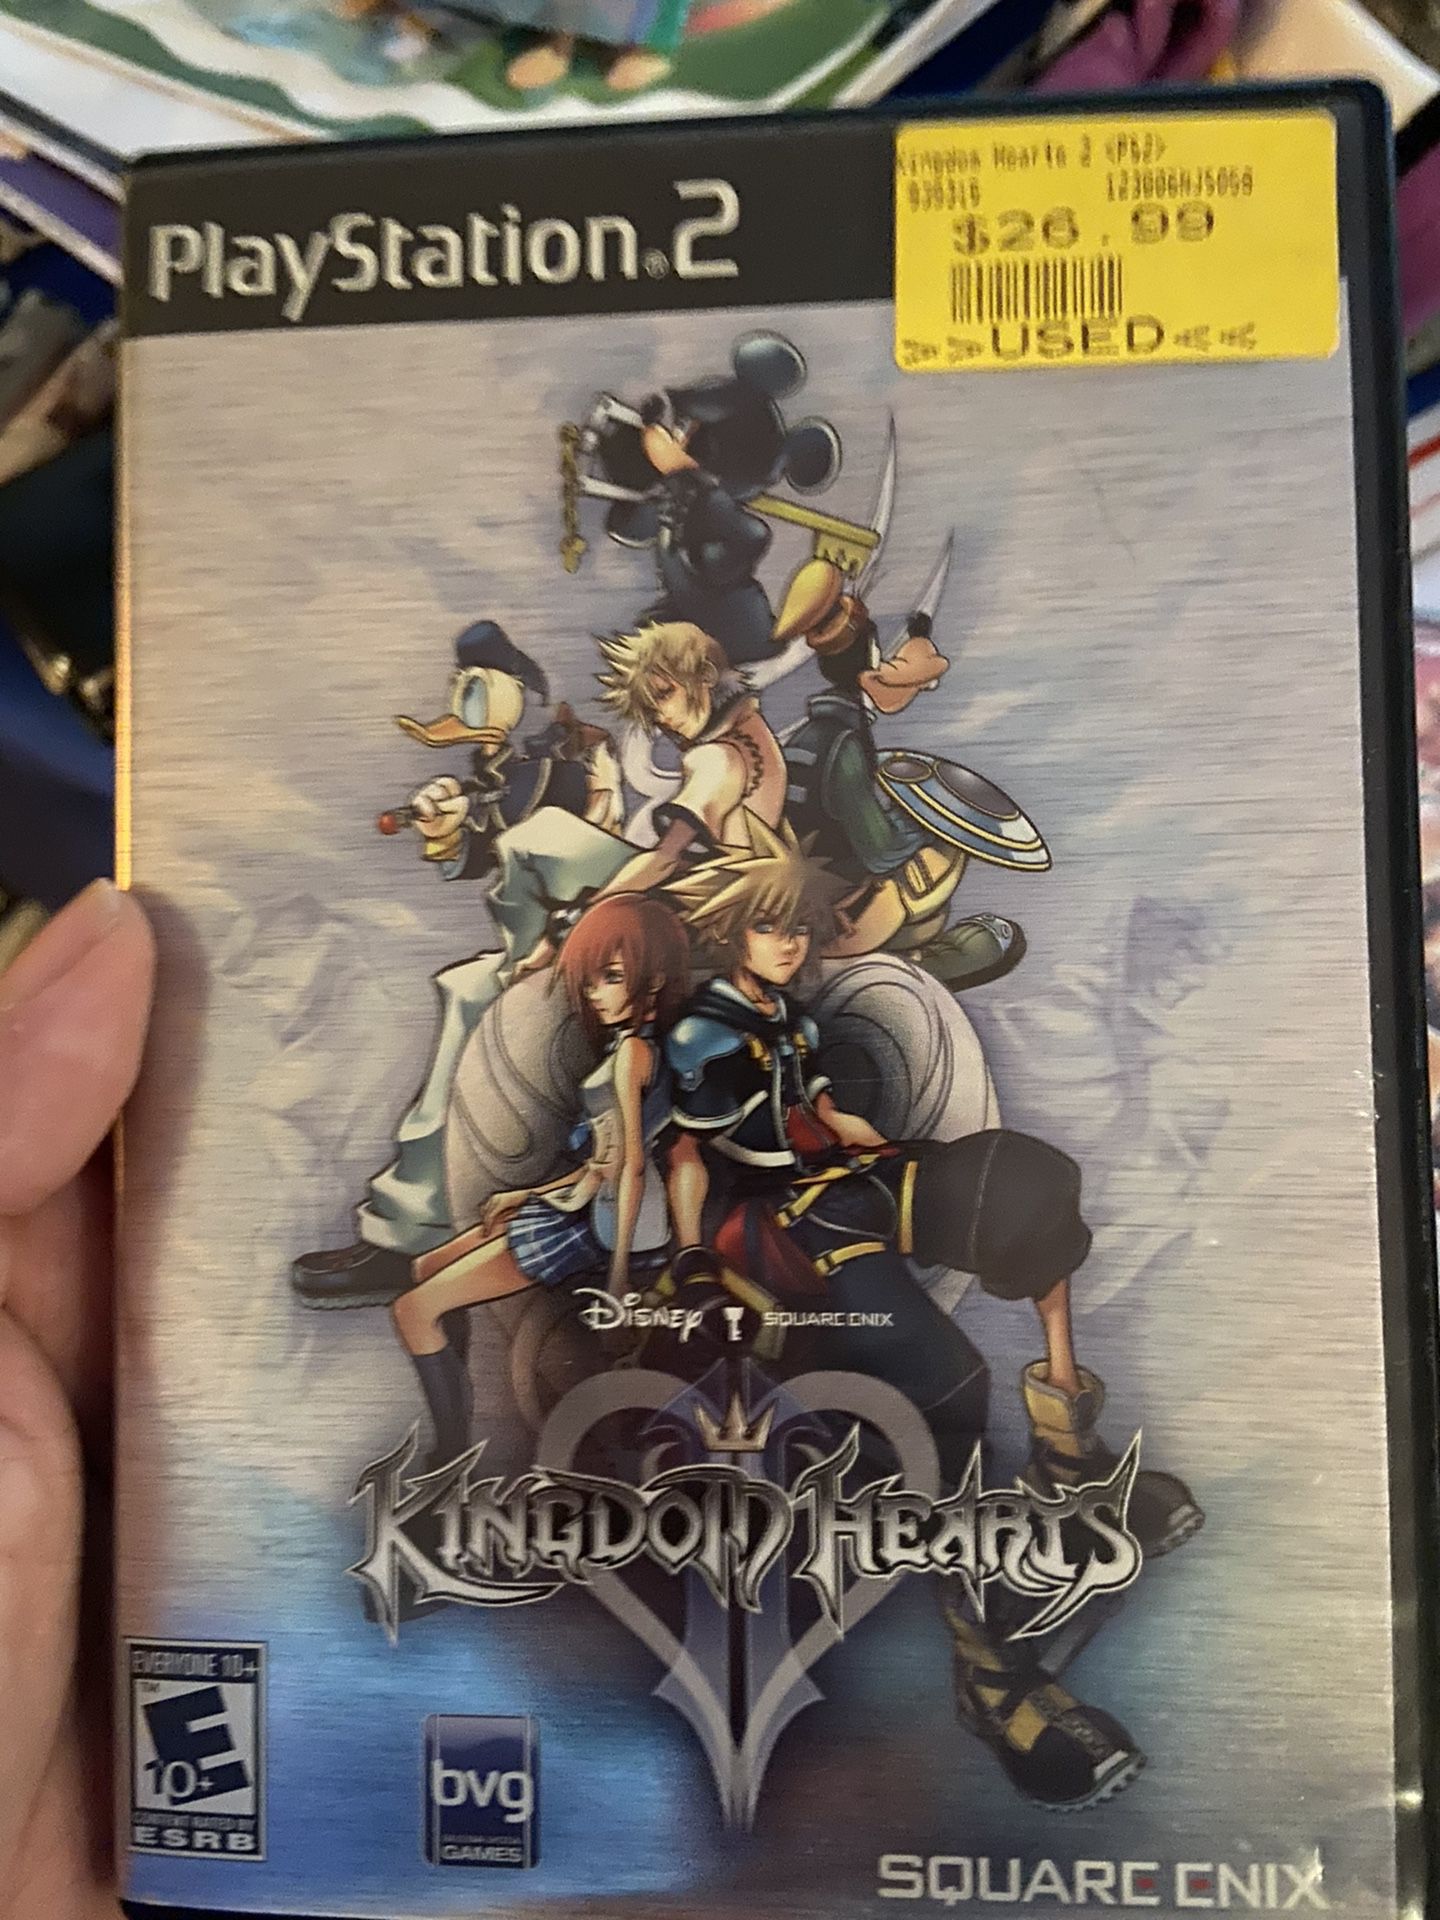 Kingdom Hearts 2 for Ps2